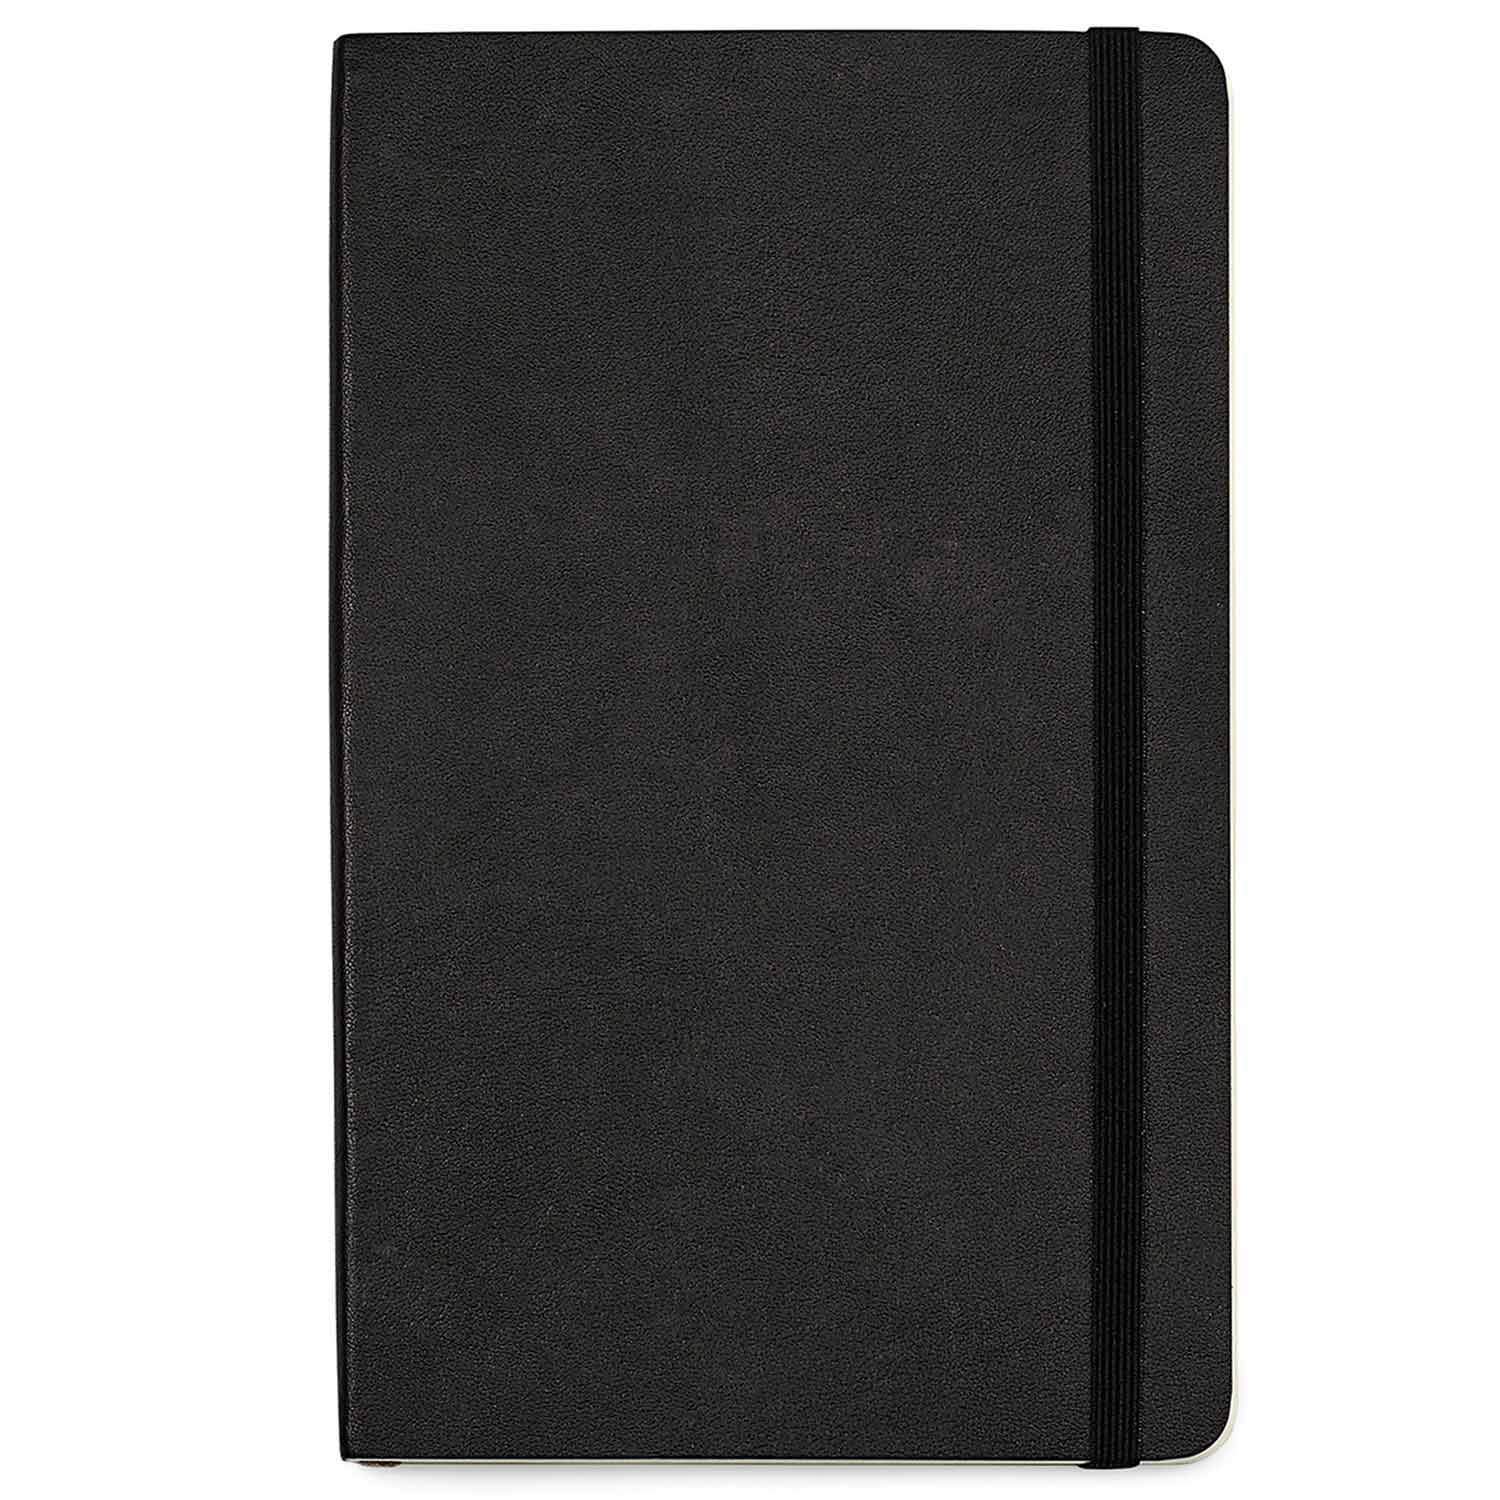 Moleskine - 25 piece minimum Accessories OSFA / BLACK Moleskine® Soft Cover Squared Large Notebook (5" x 8.25")